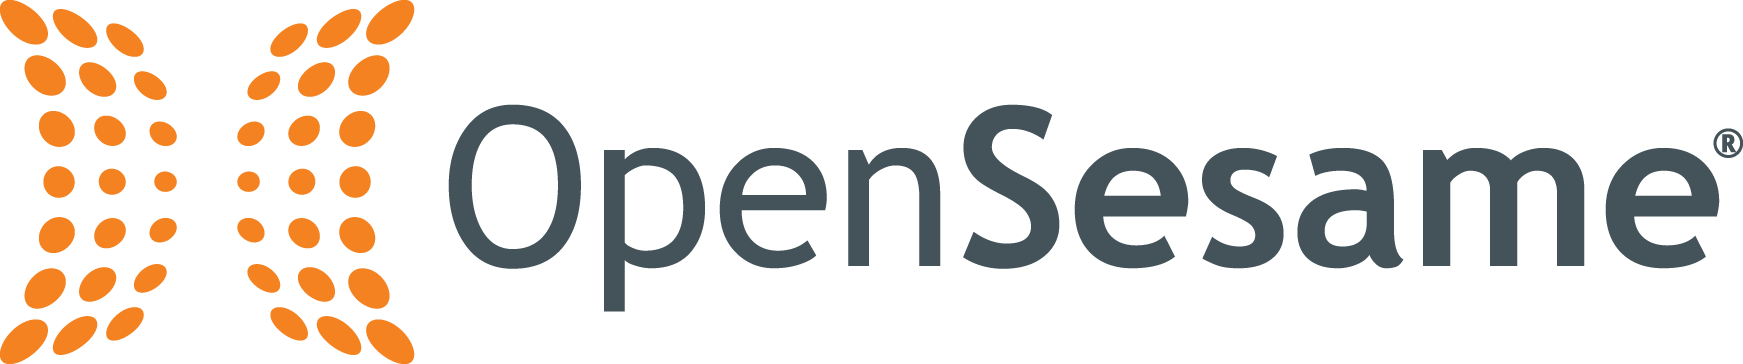 OpenSesame-logo